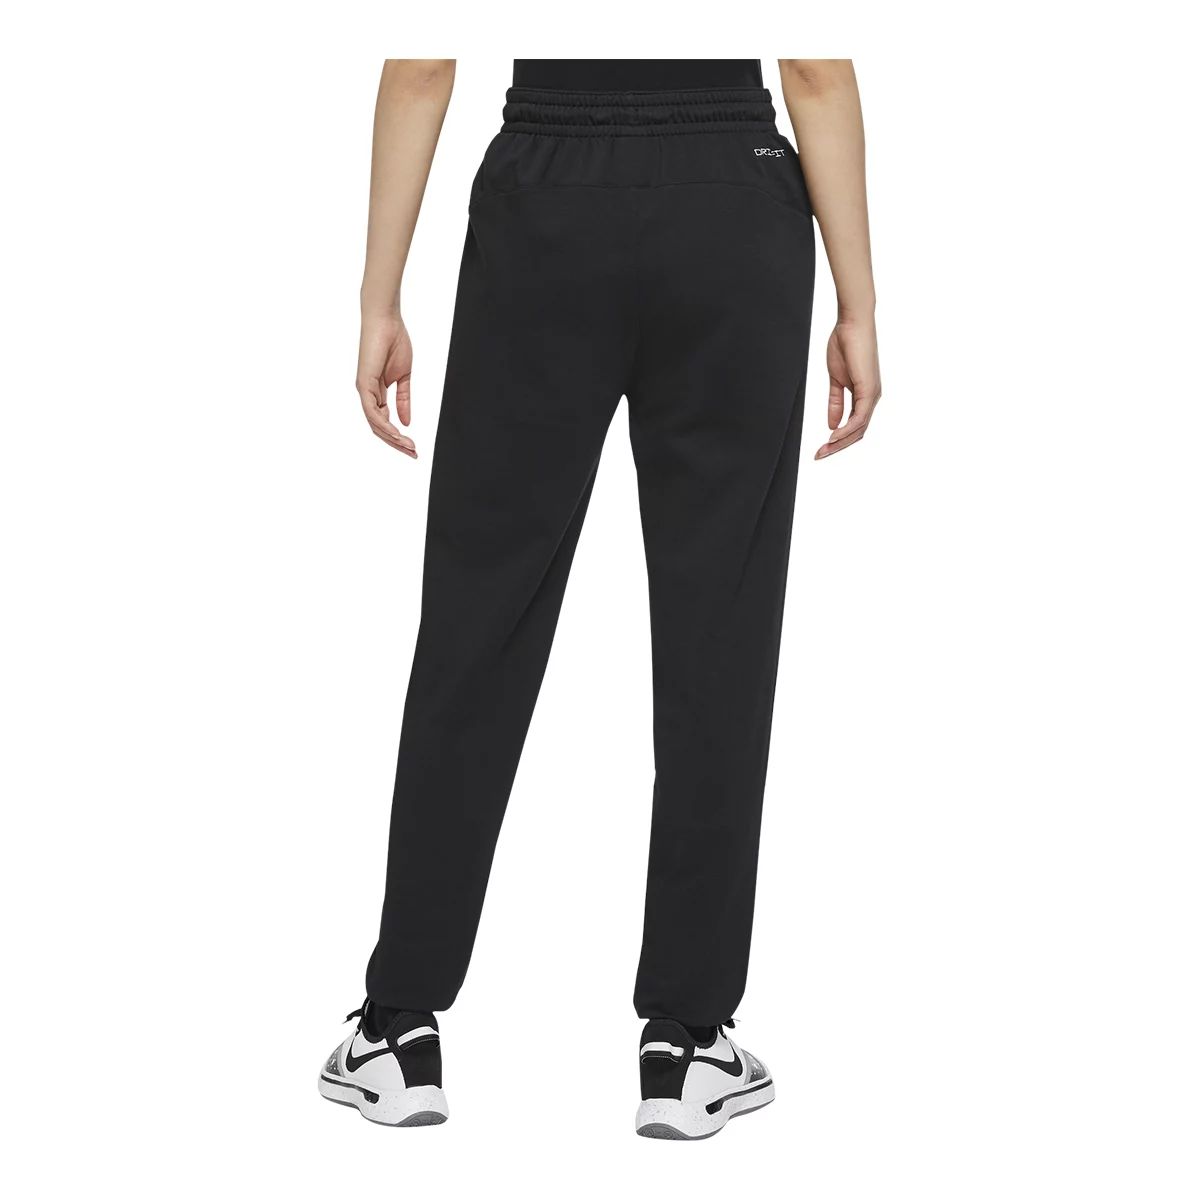 Nike Sweatpants/ Track Pants Black/ White stripes Women/ Men XS New